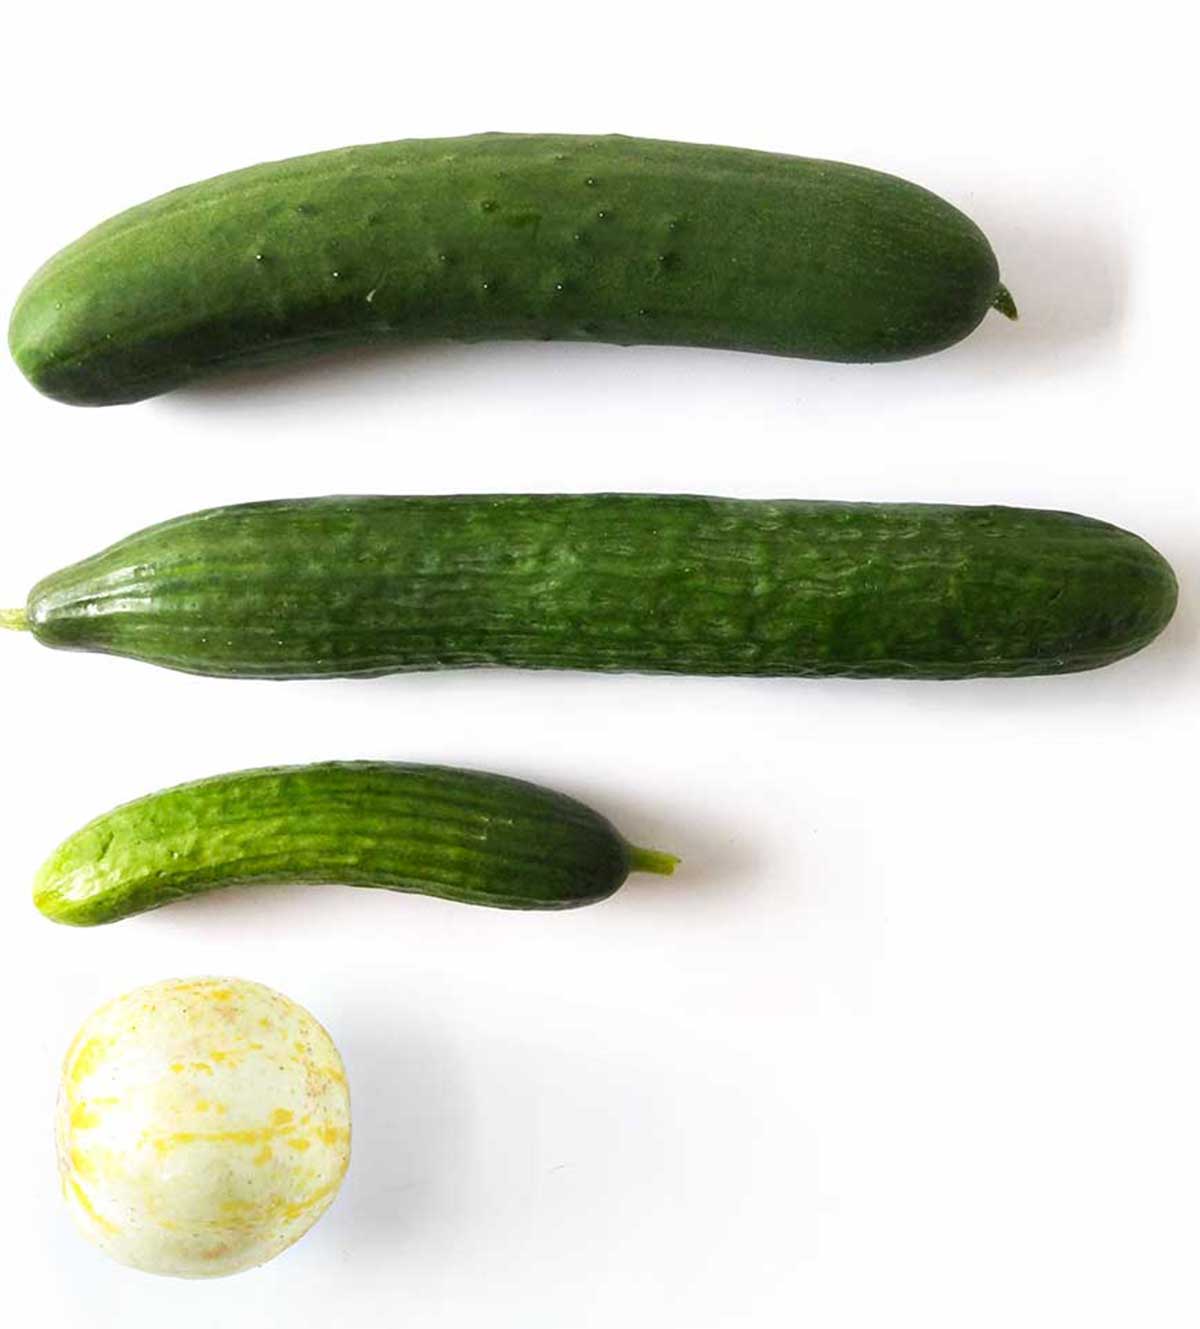 https://thecottagebluffton.com/wp-content/uploads/2015/06/cucumber-hot-house-lemon-persian-2.jpg